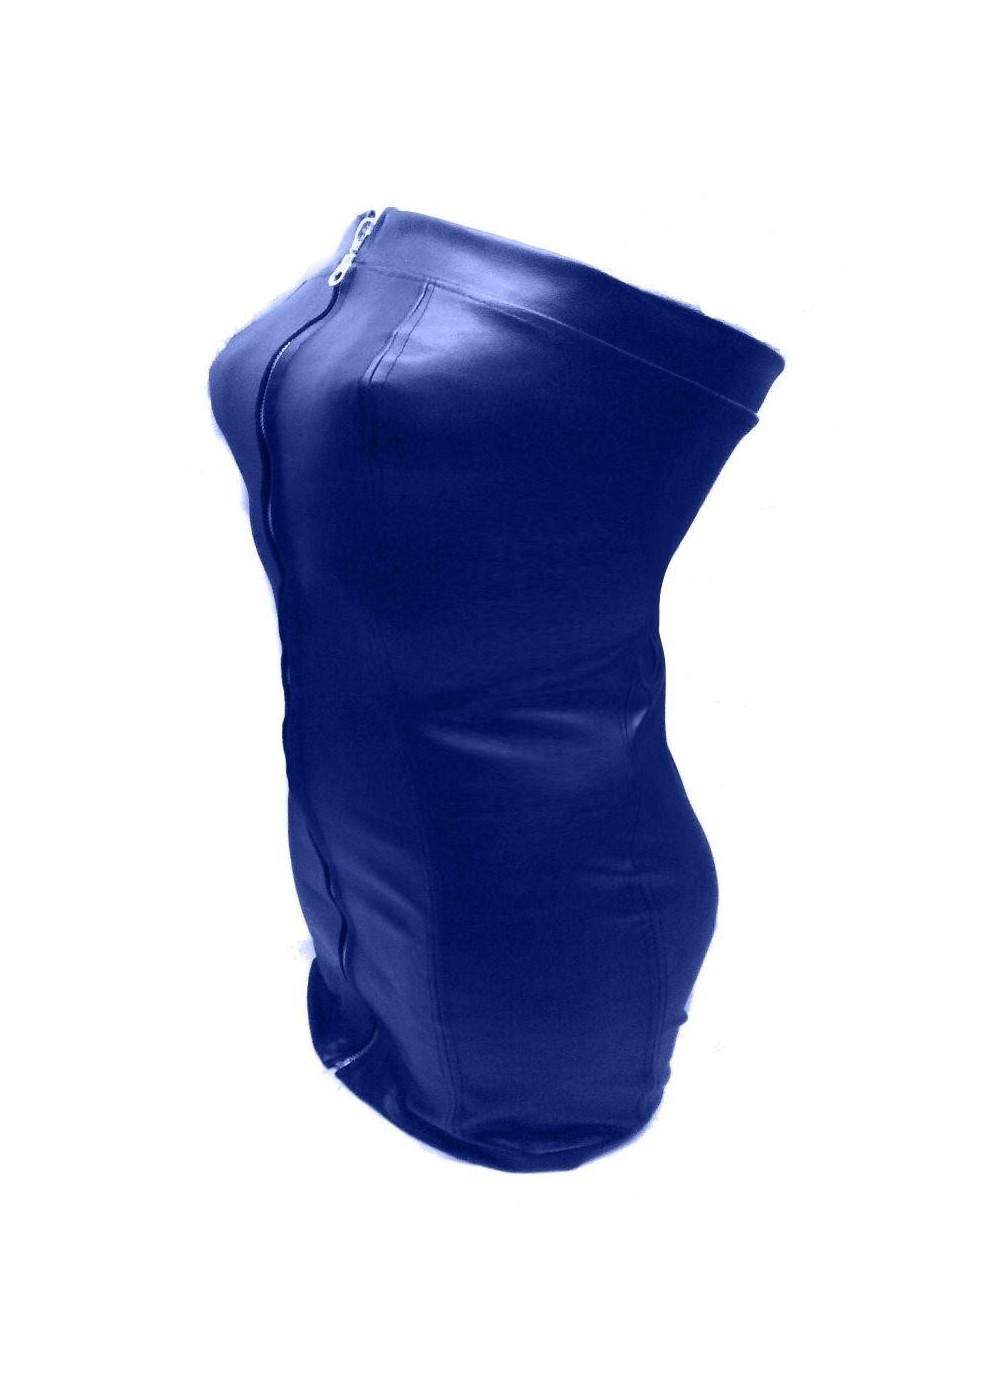 black week Save 15% Very soft leather dress blue - 